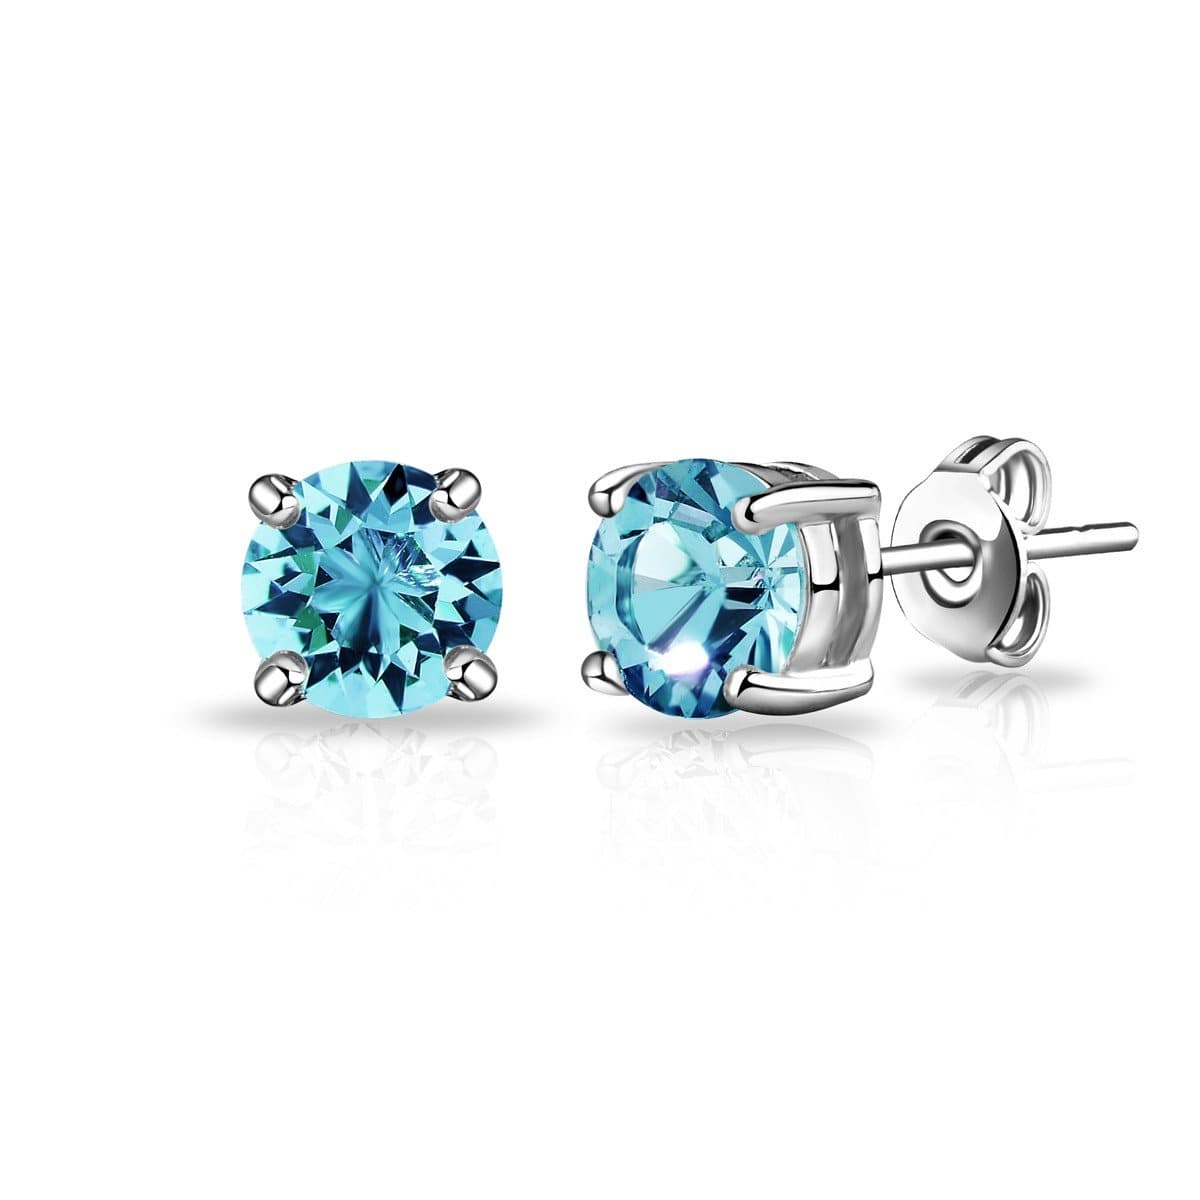 Light Blue Stud Earrings Created with Zircondia® Crystals by Philip Jones Jewellery